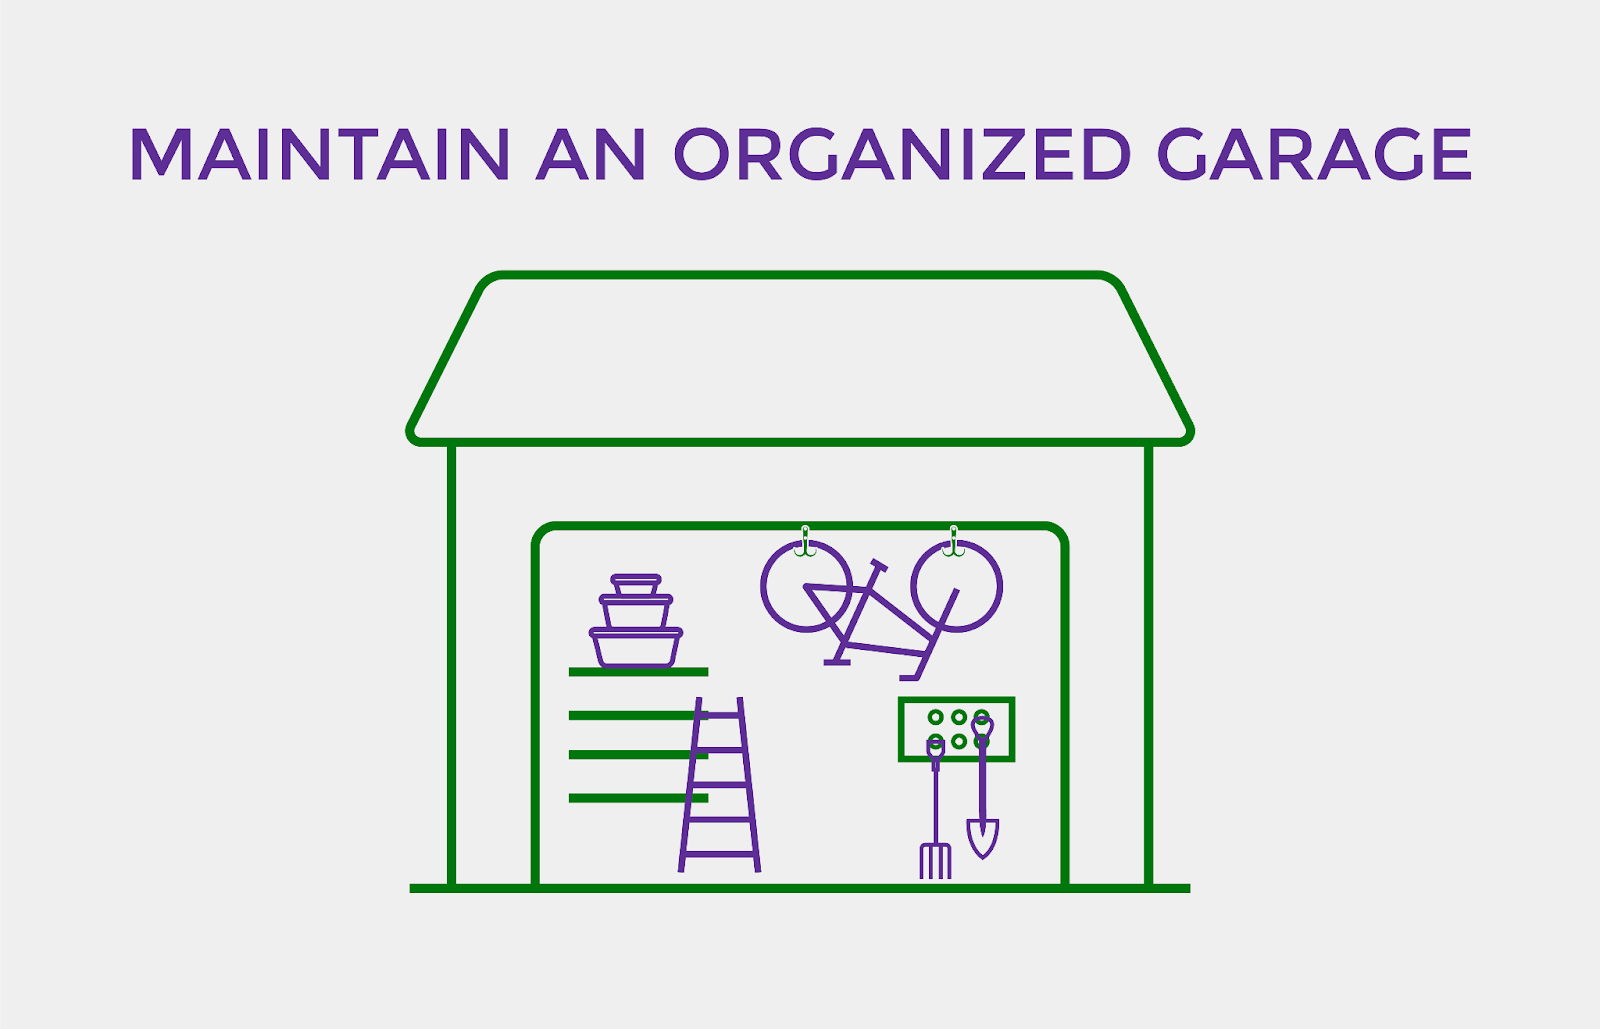 Maintain an organized garage